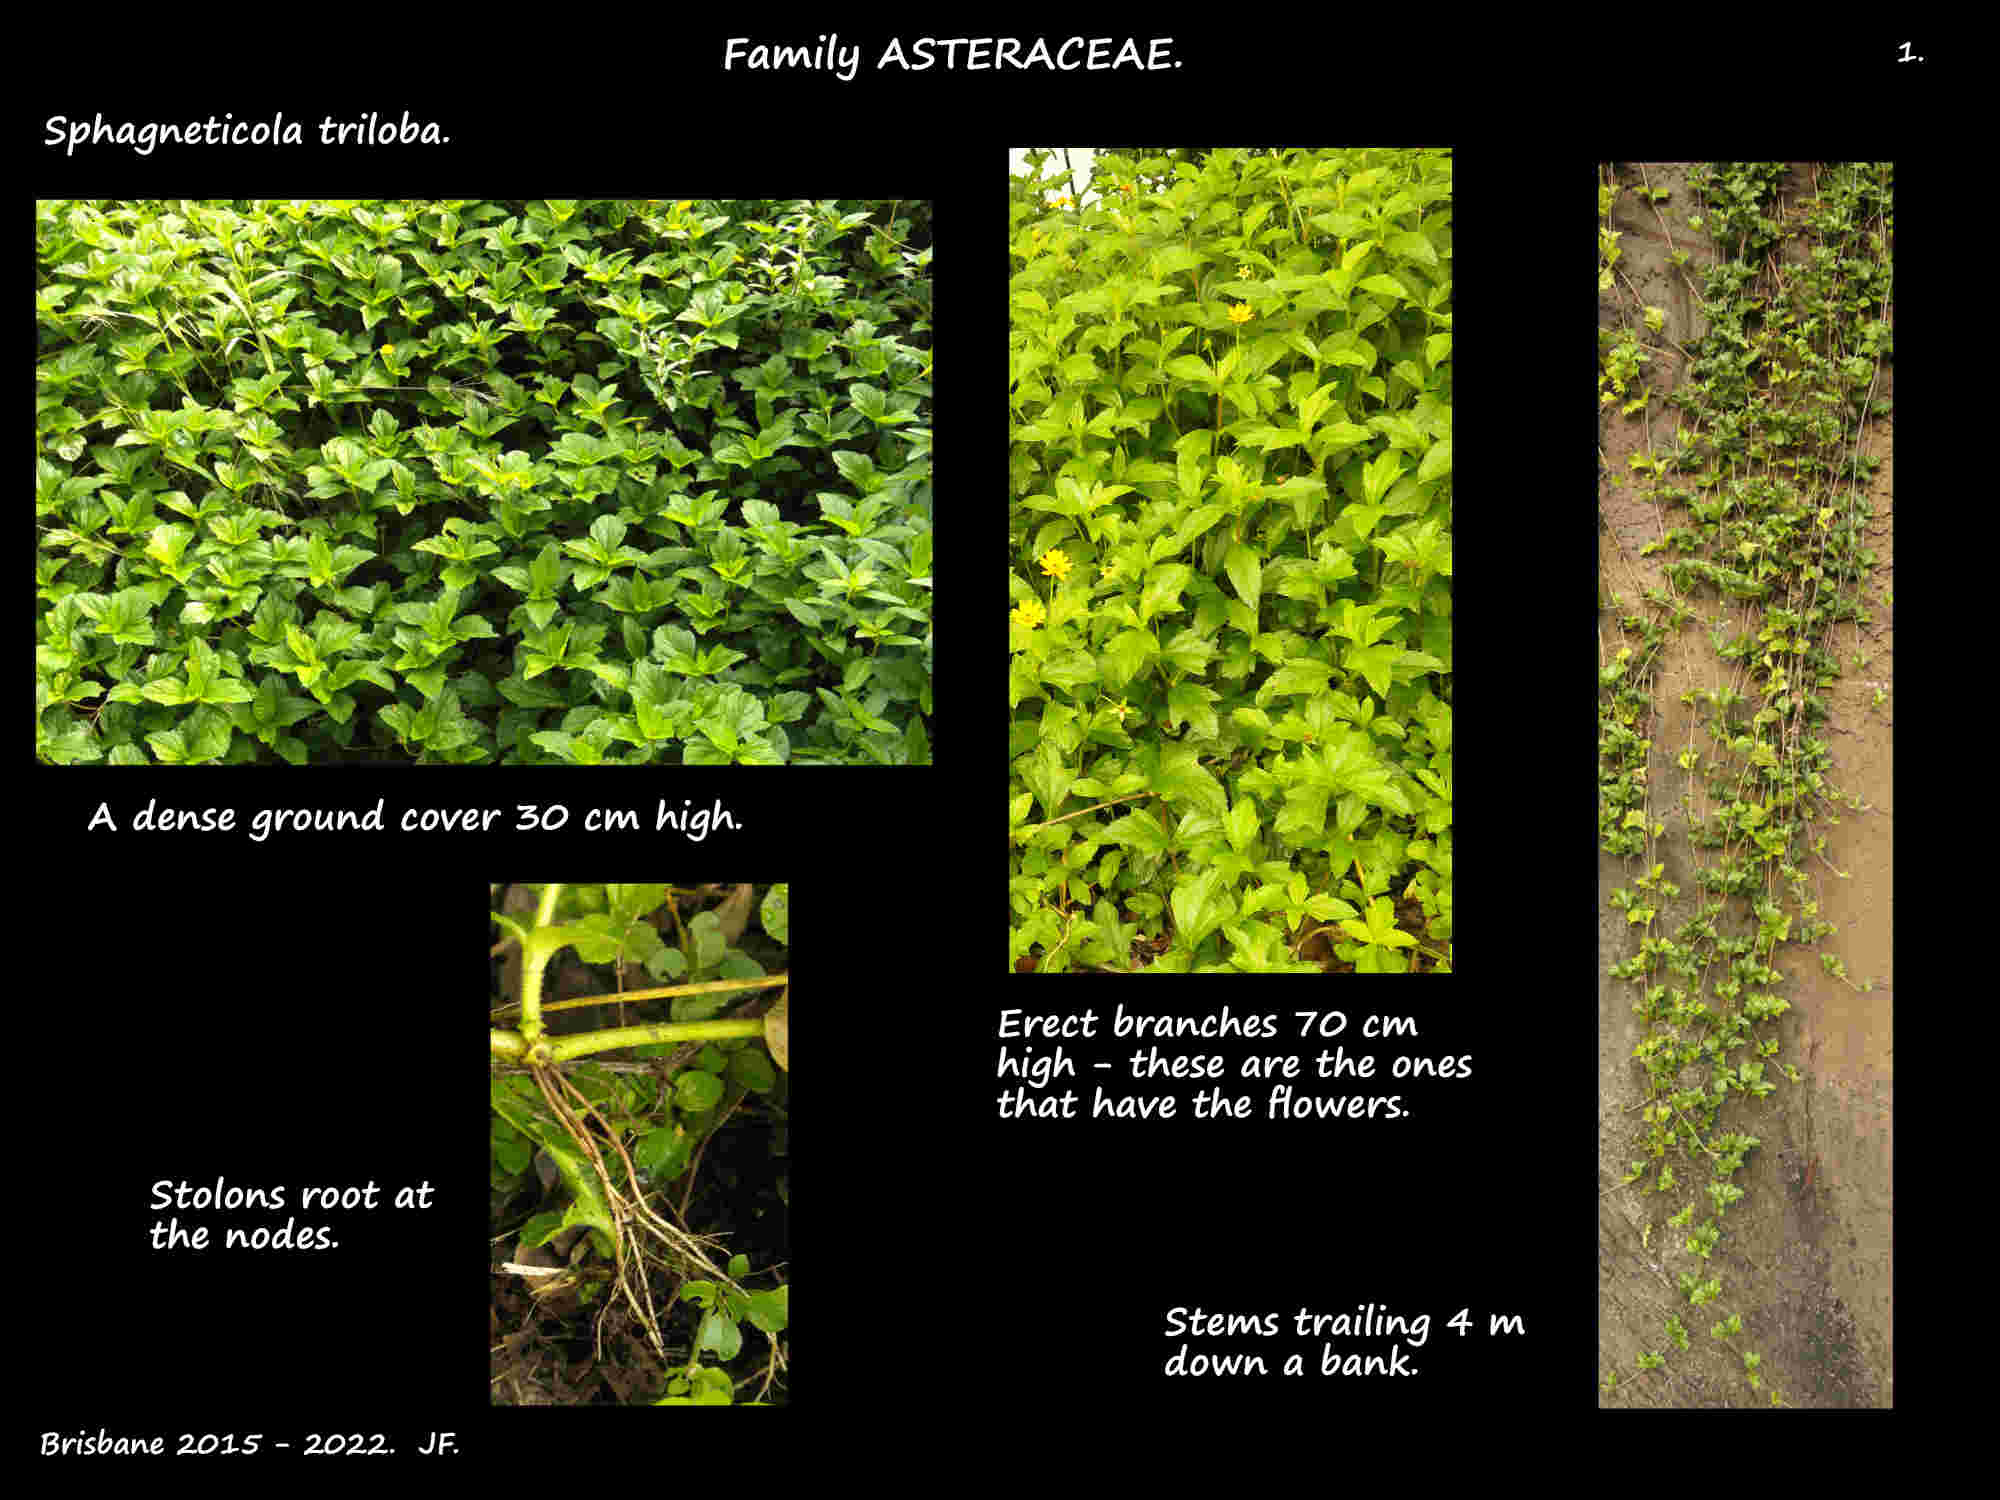 1 Sphagneticola triloba plants & roots